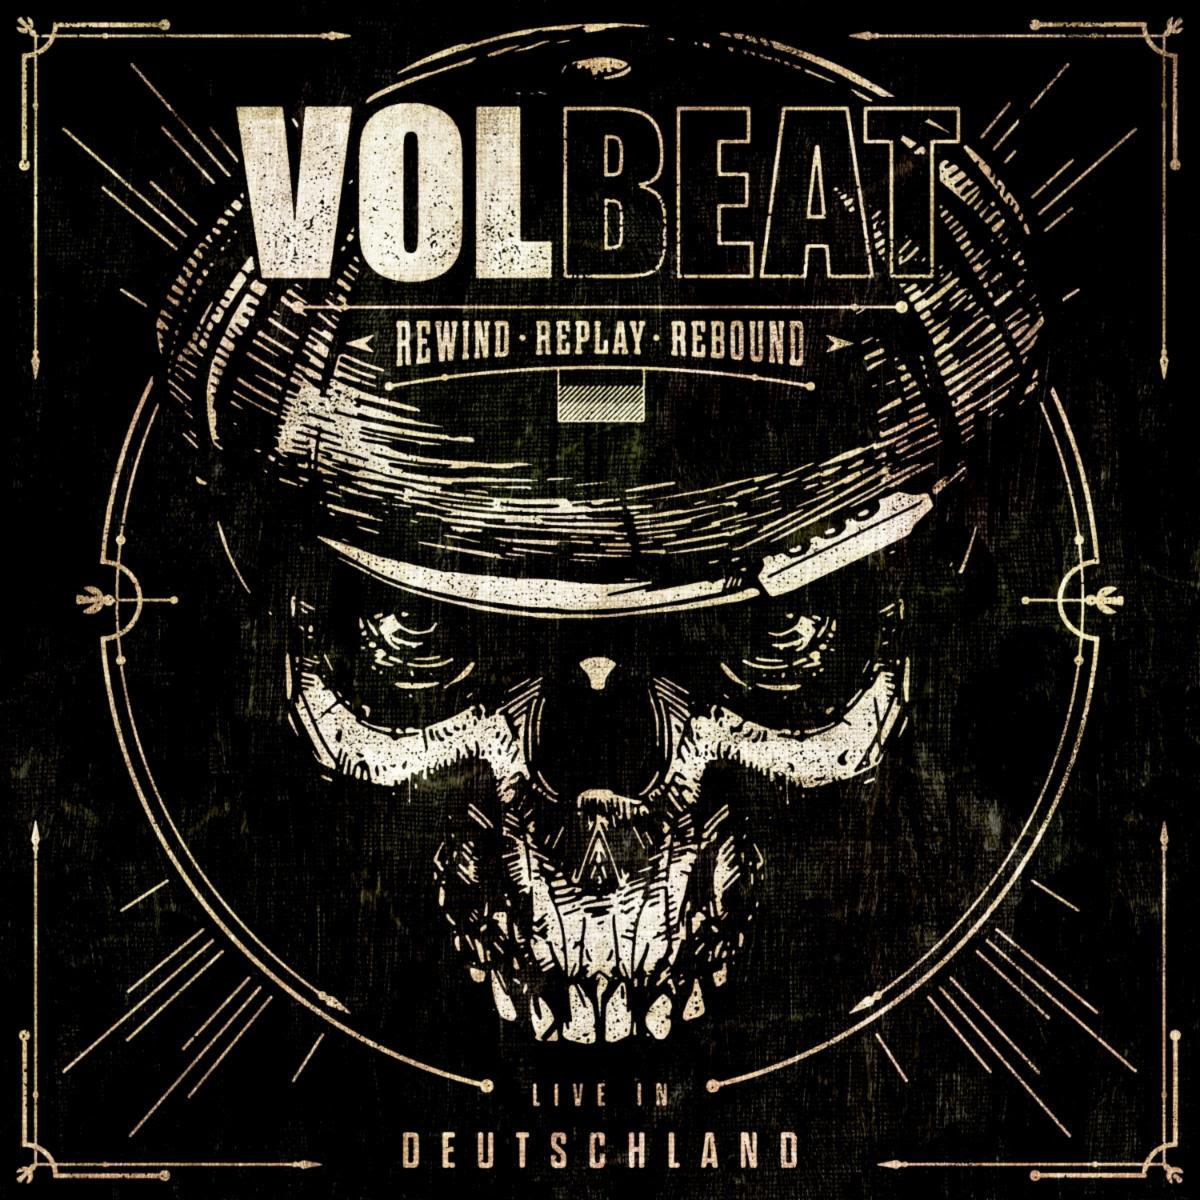 fallen volbeat album